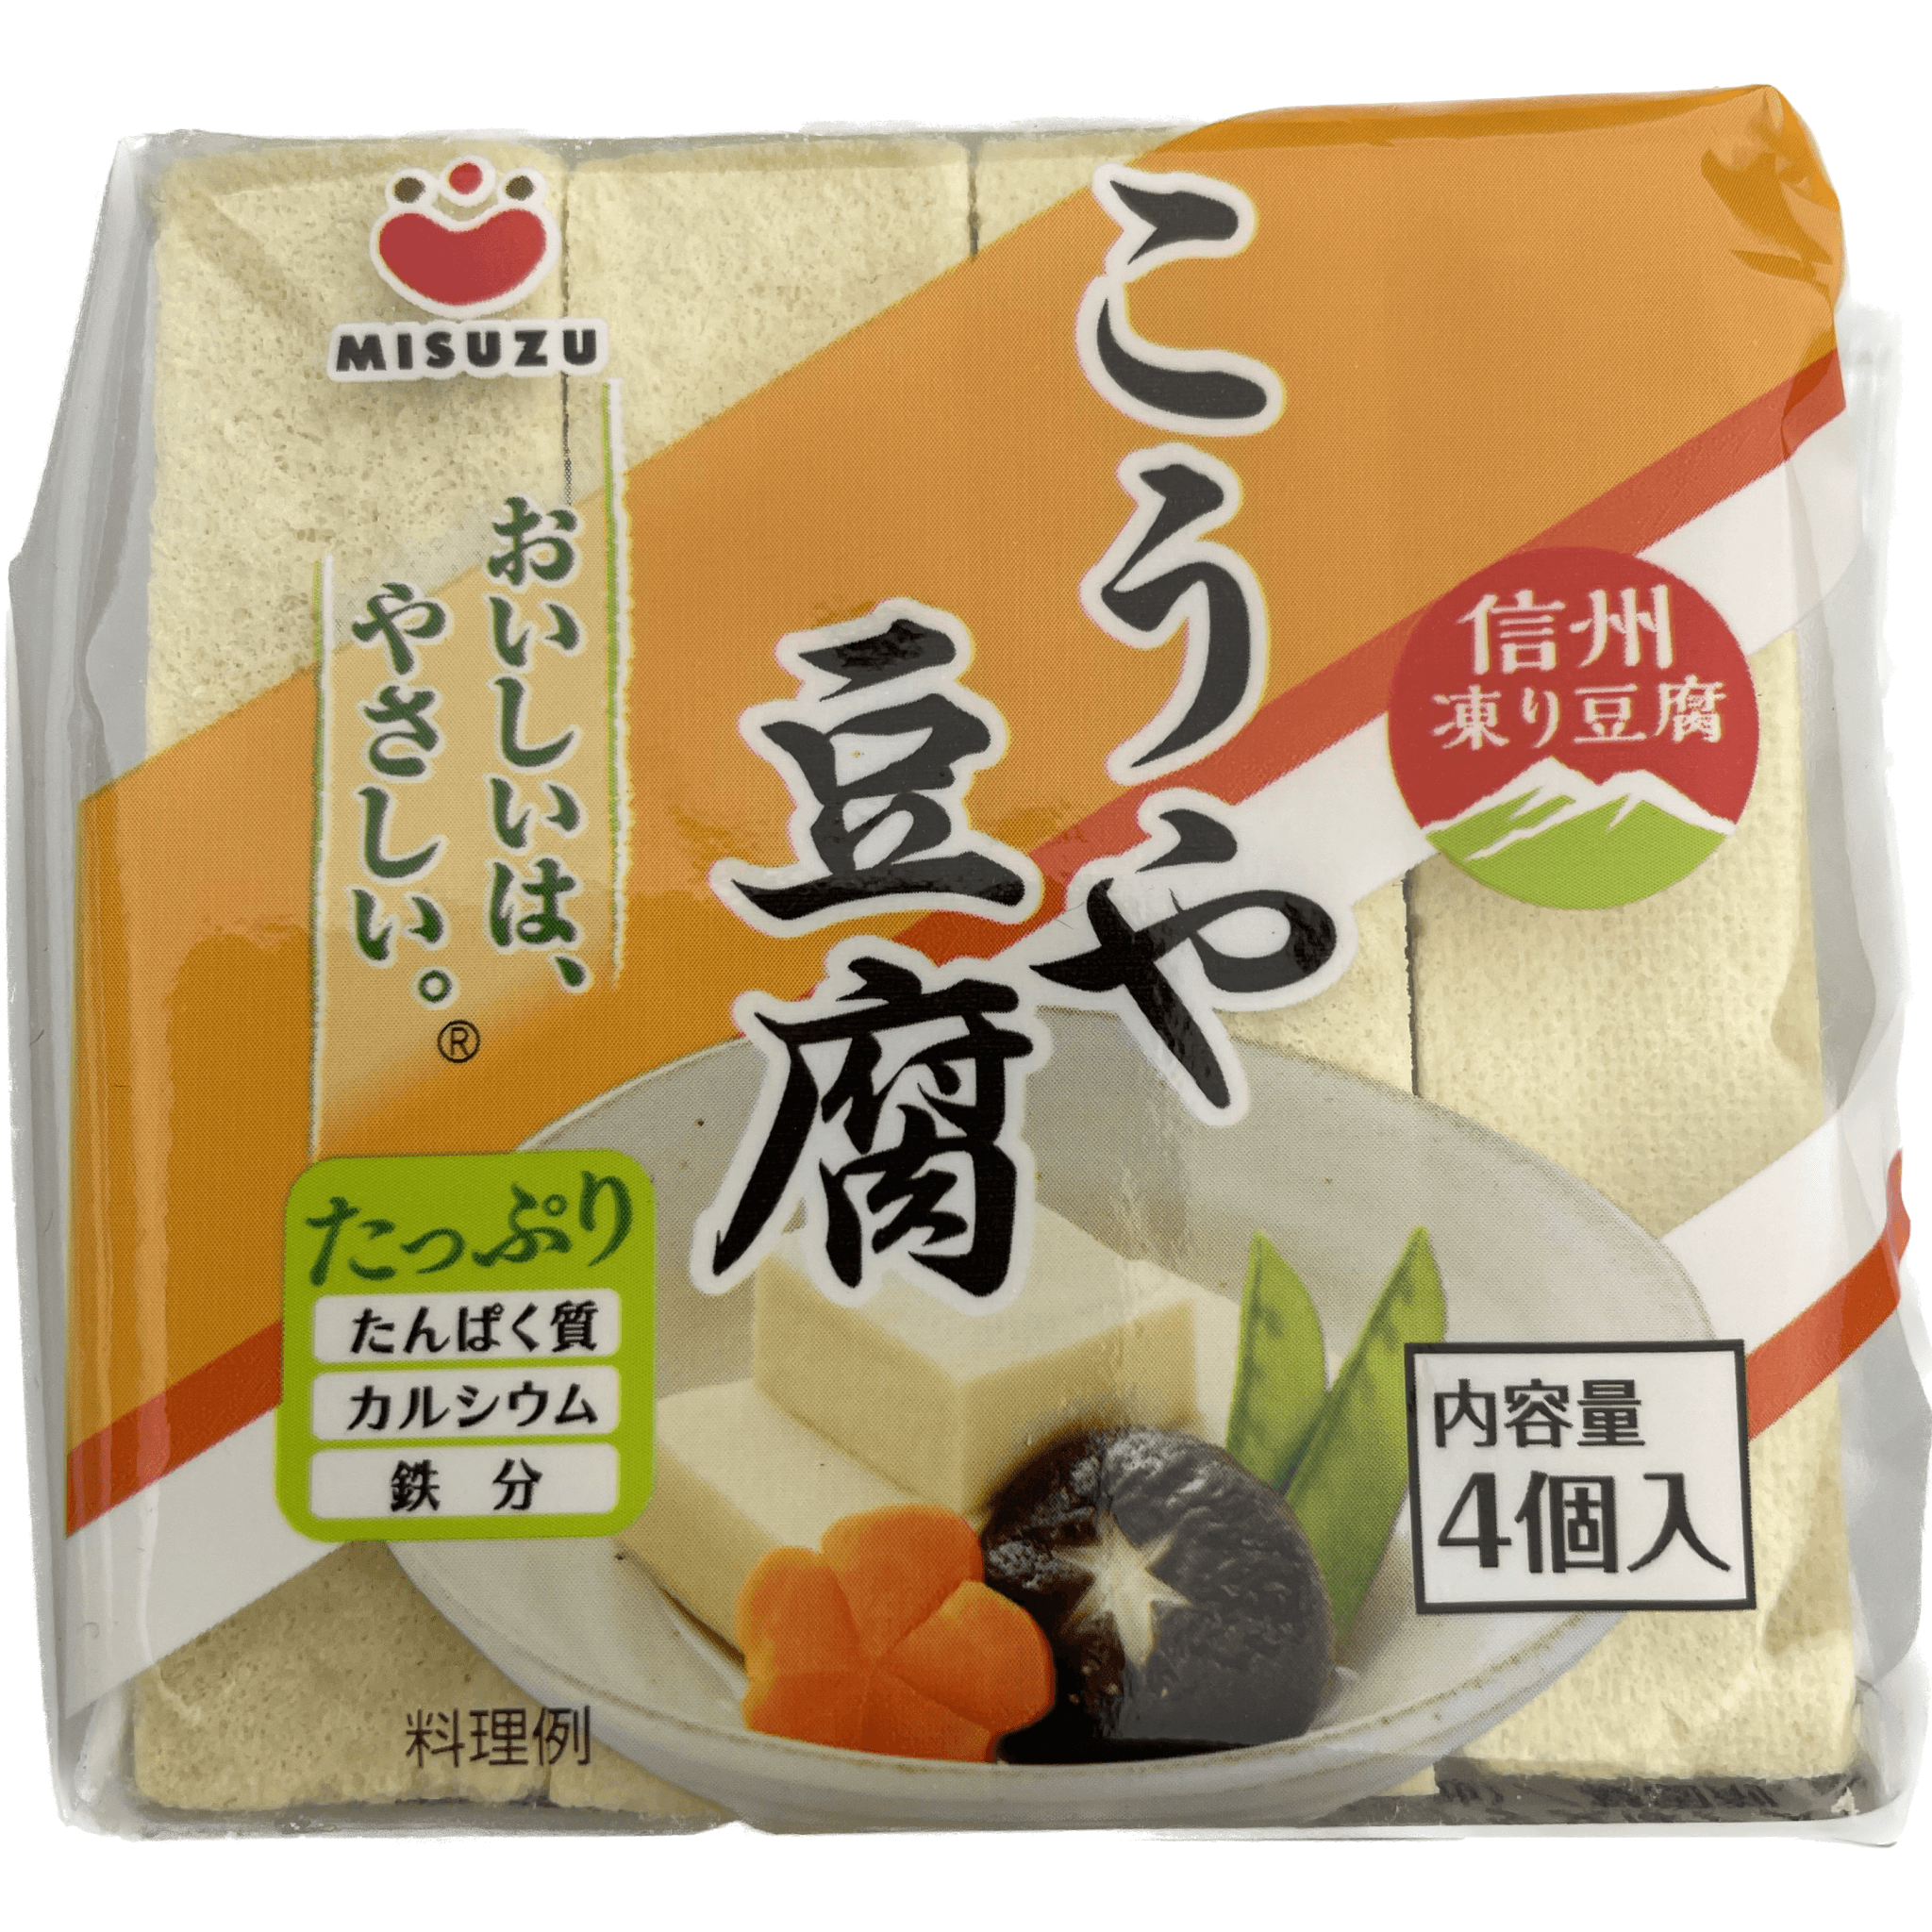 Misuzu Koya Tofu (Kori Tofu) 4pieces / みすず こうや豆腐 (凍り豆腐) 4個入